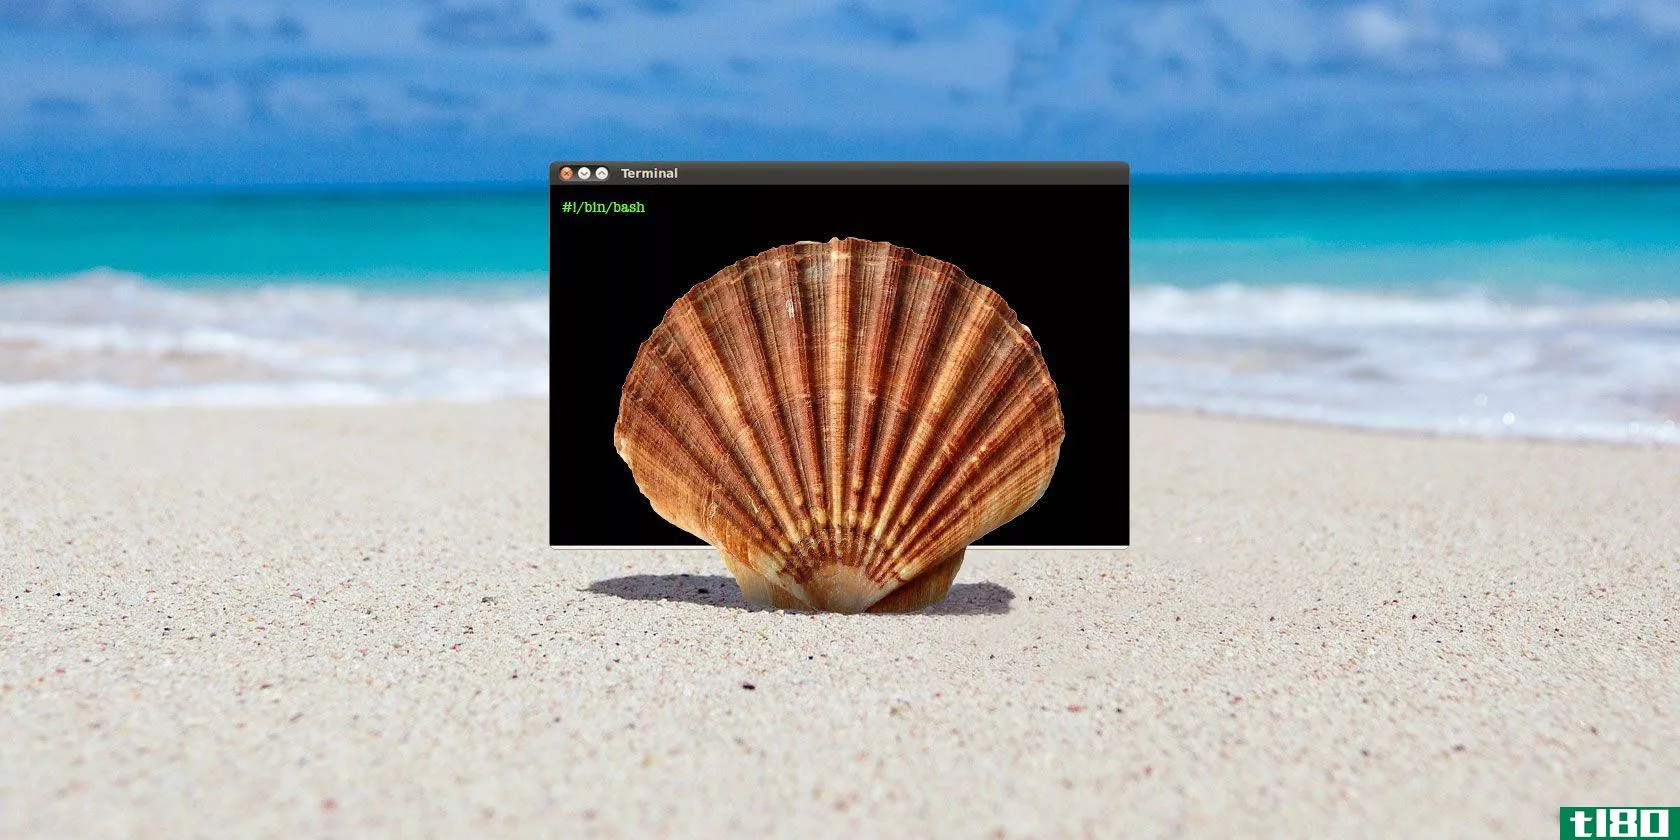 shell-scripting